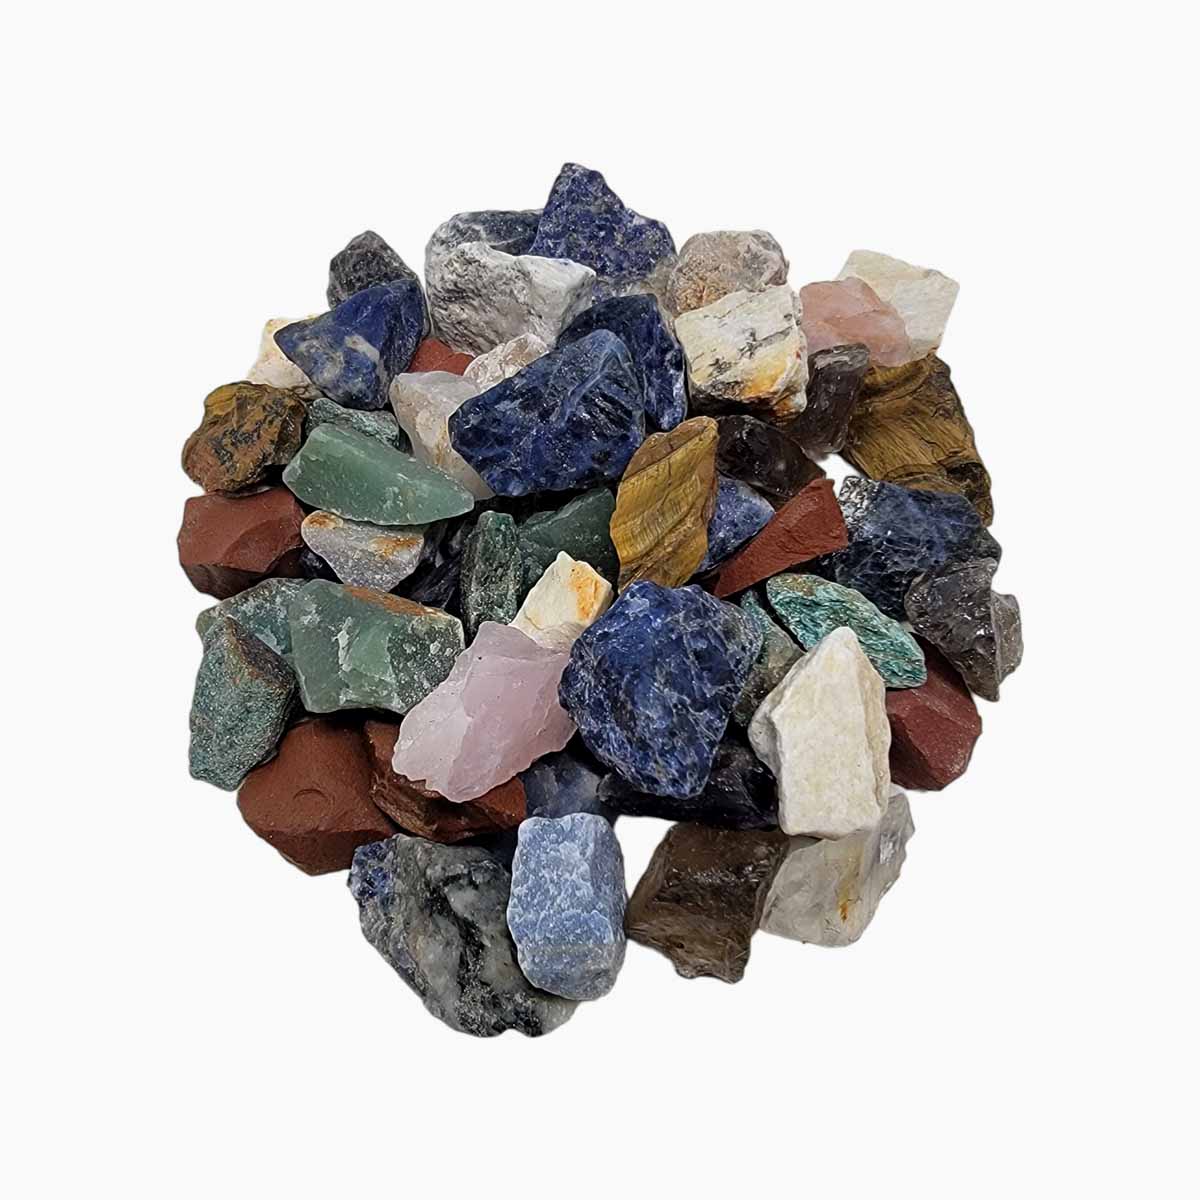 Natural Stones, Stones, Materials